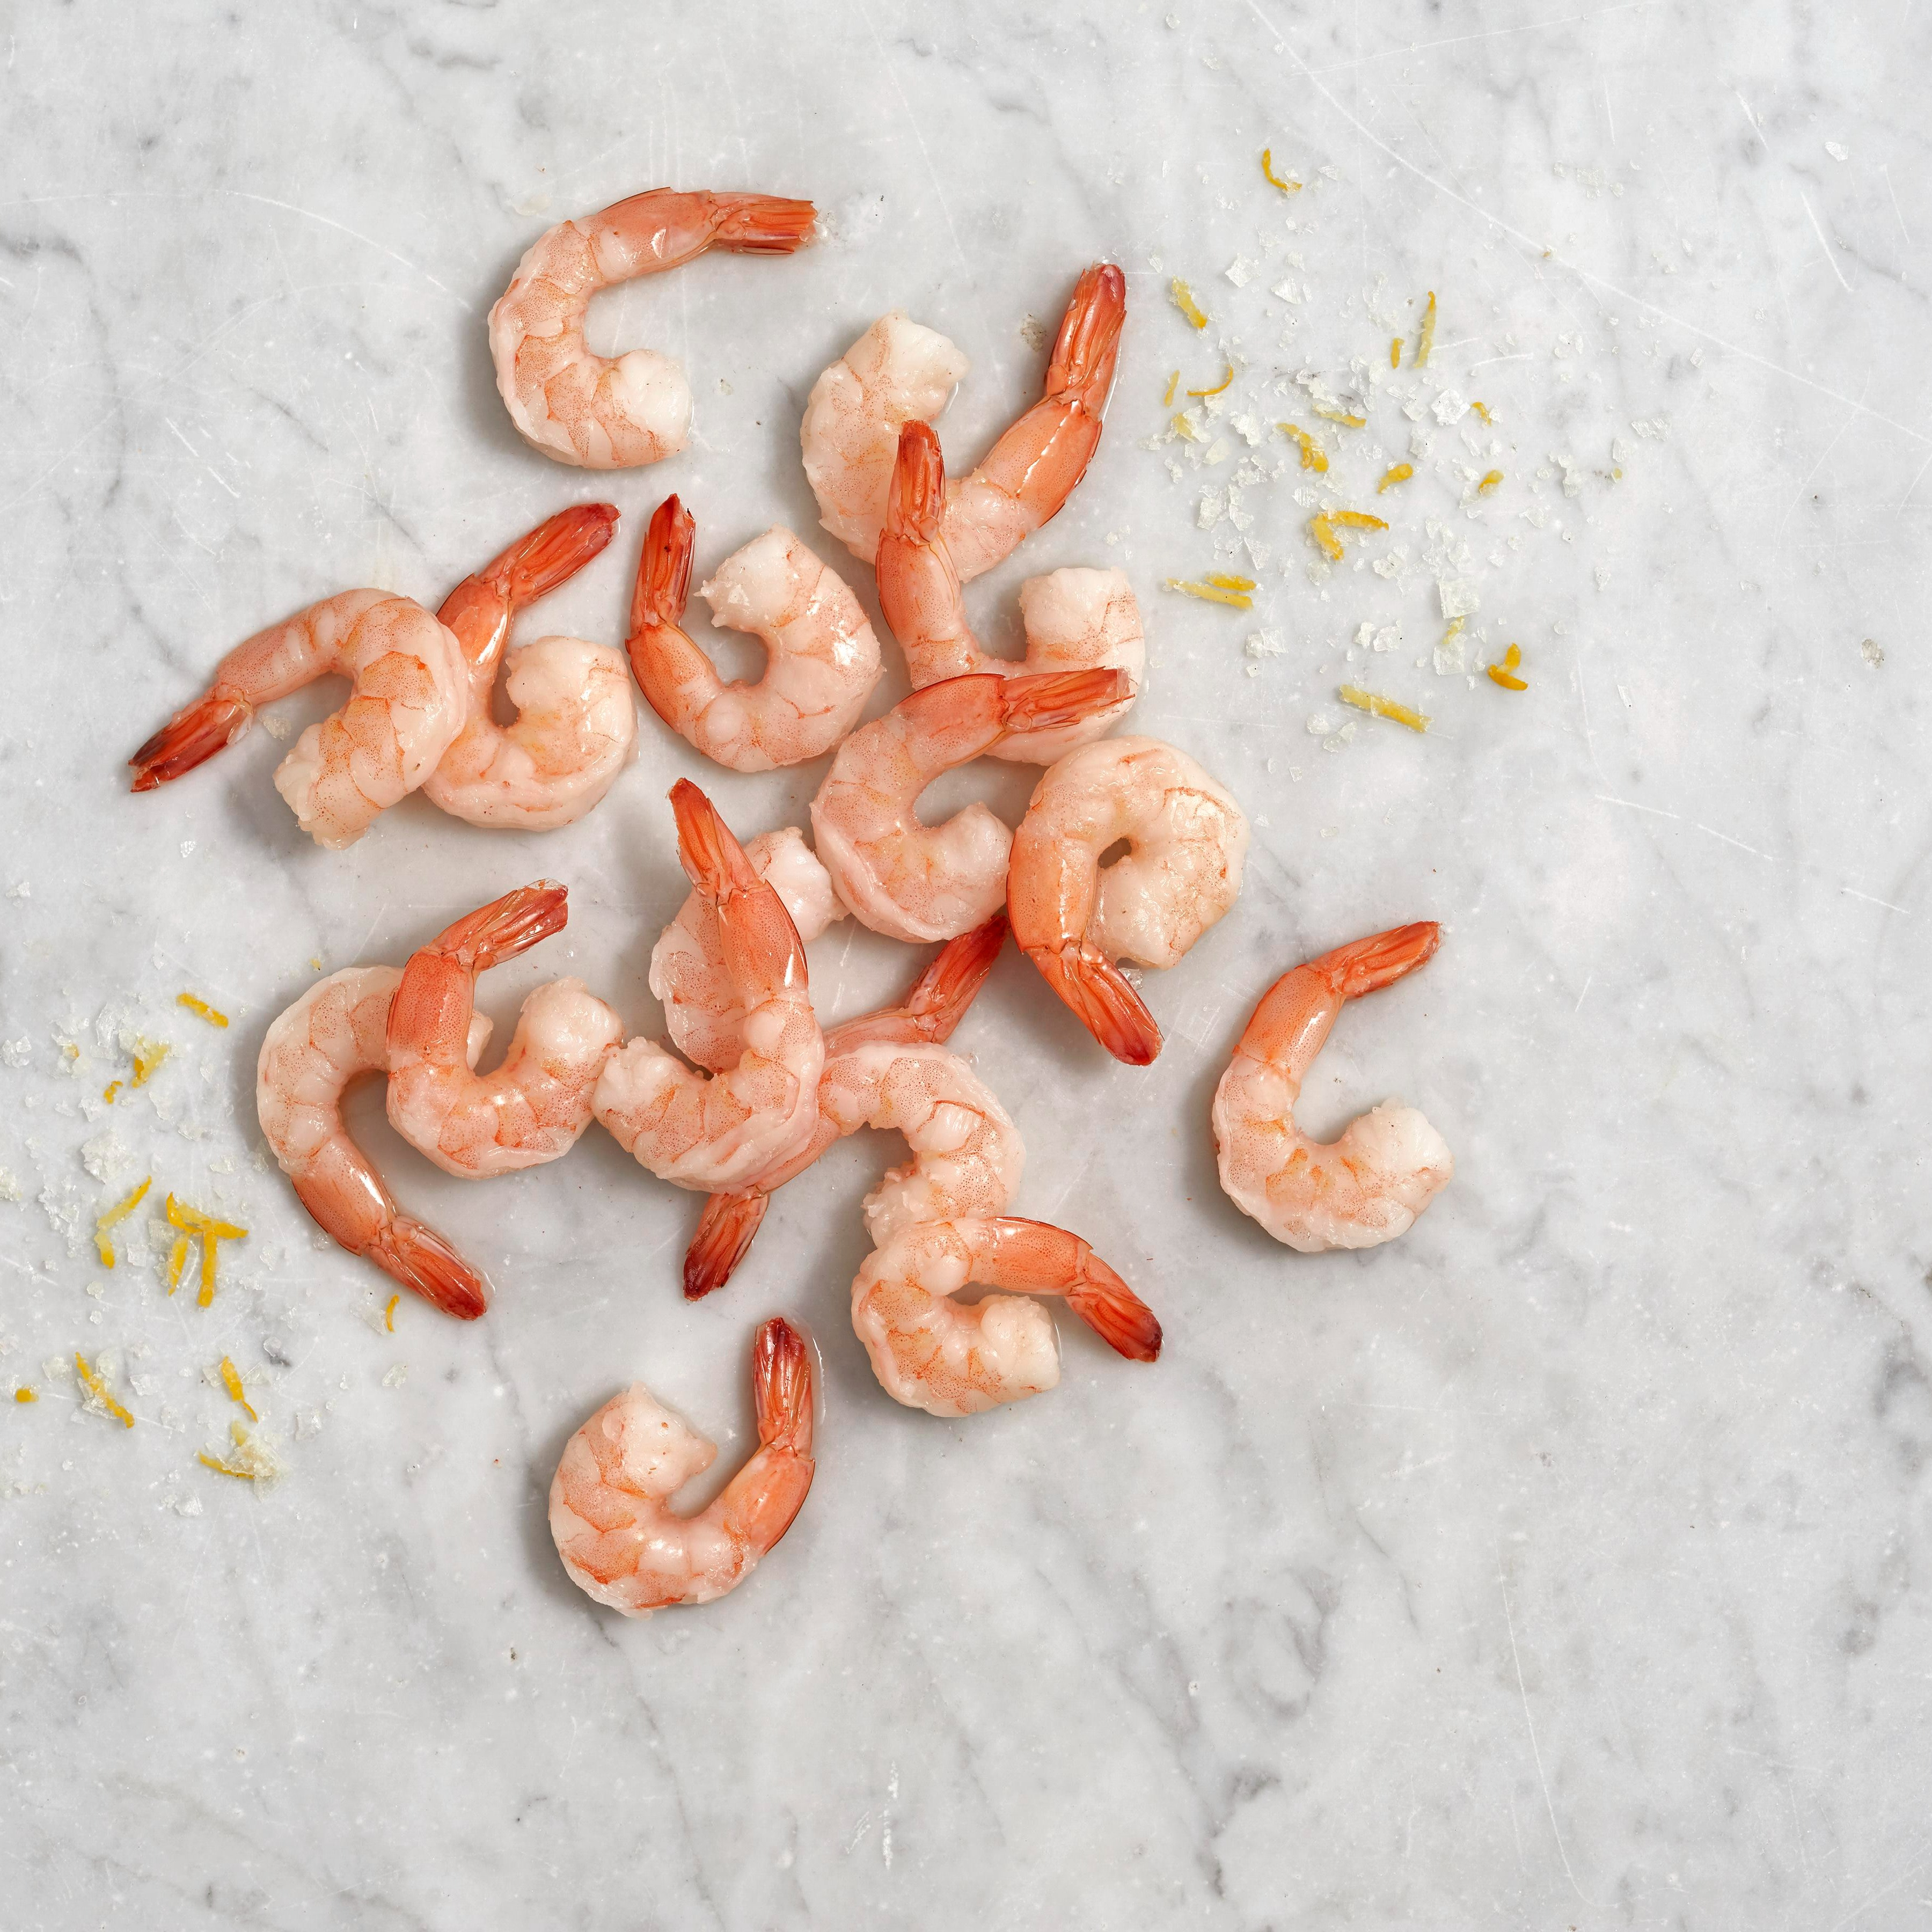 6017 WF Raw Fully Cooked Peeled & Deveined Medium Shrimp Tail On Seafood